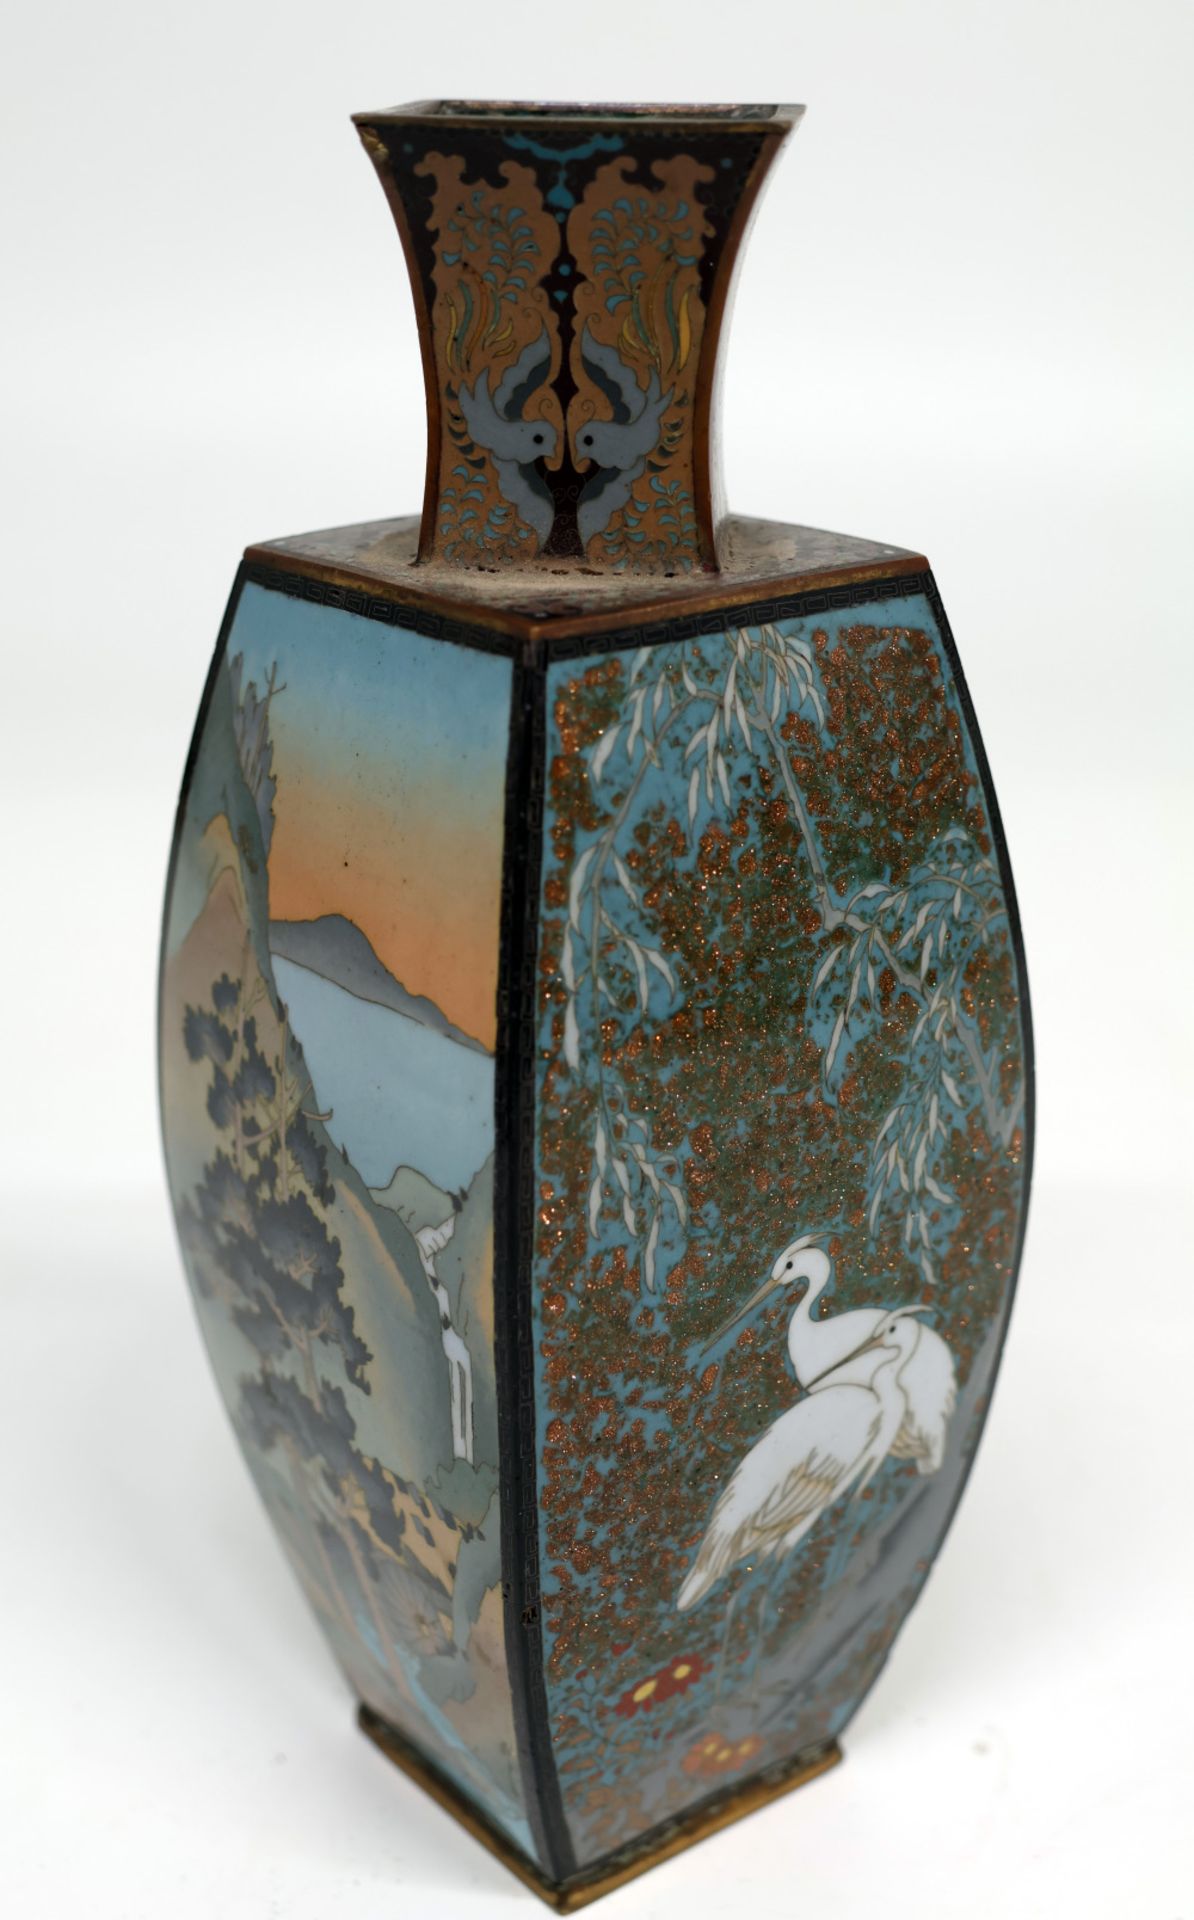 Asien, frühe Cloisonné Vase mit feinen Landschafts- und Vogelmotiven, interessante, kantige Form, - Image 4 of 11